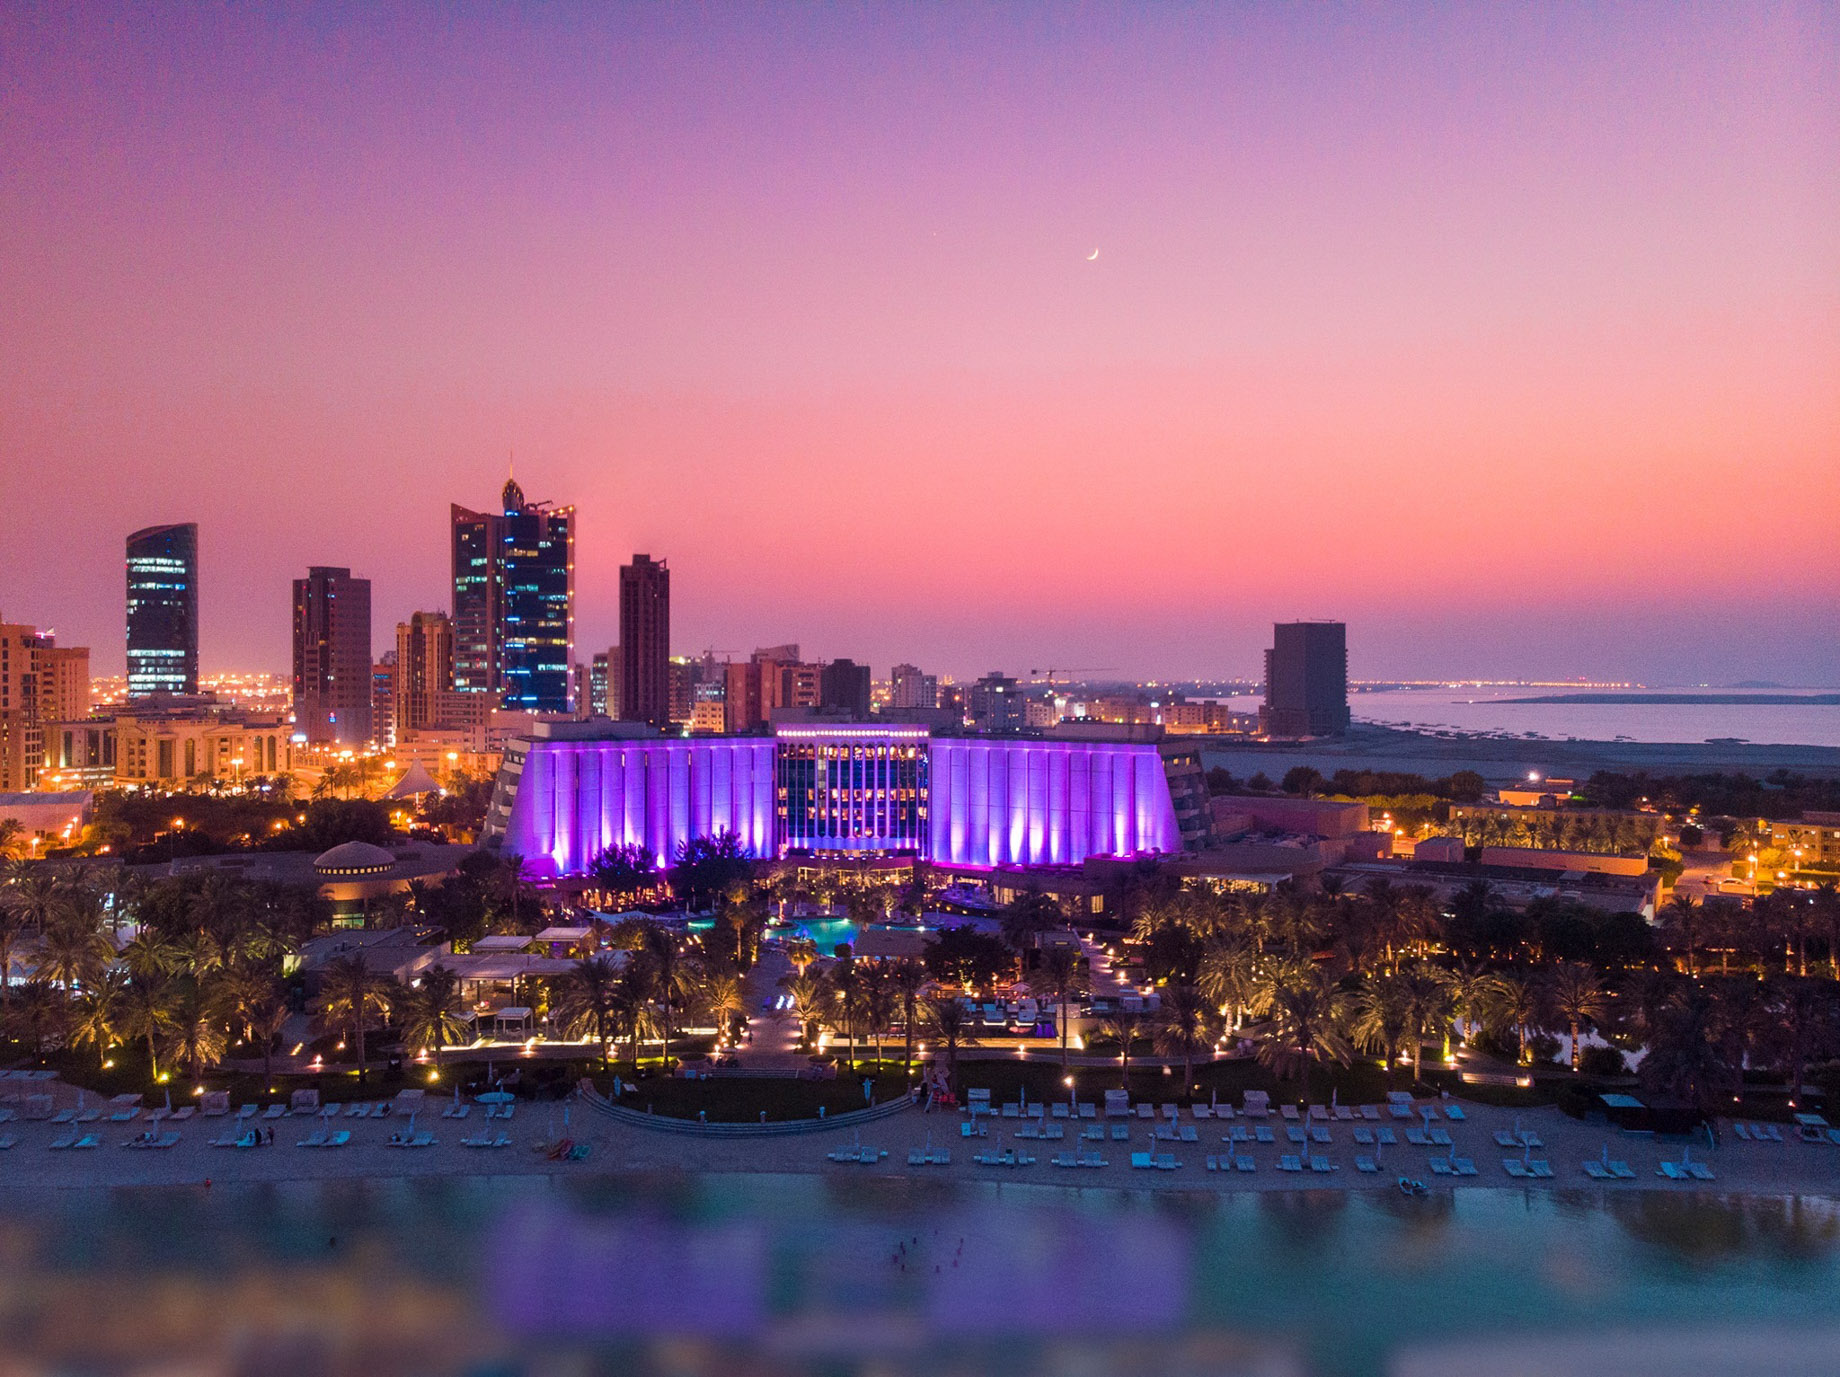 The Ritz-Carlton, Bahrain Resort Hotel - Manama, Bahrain - Evening Aerial View